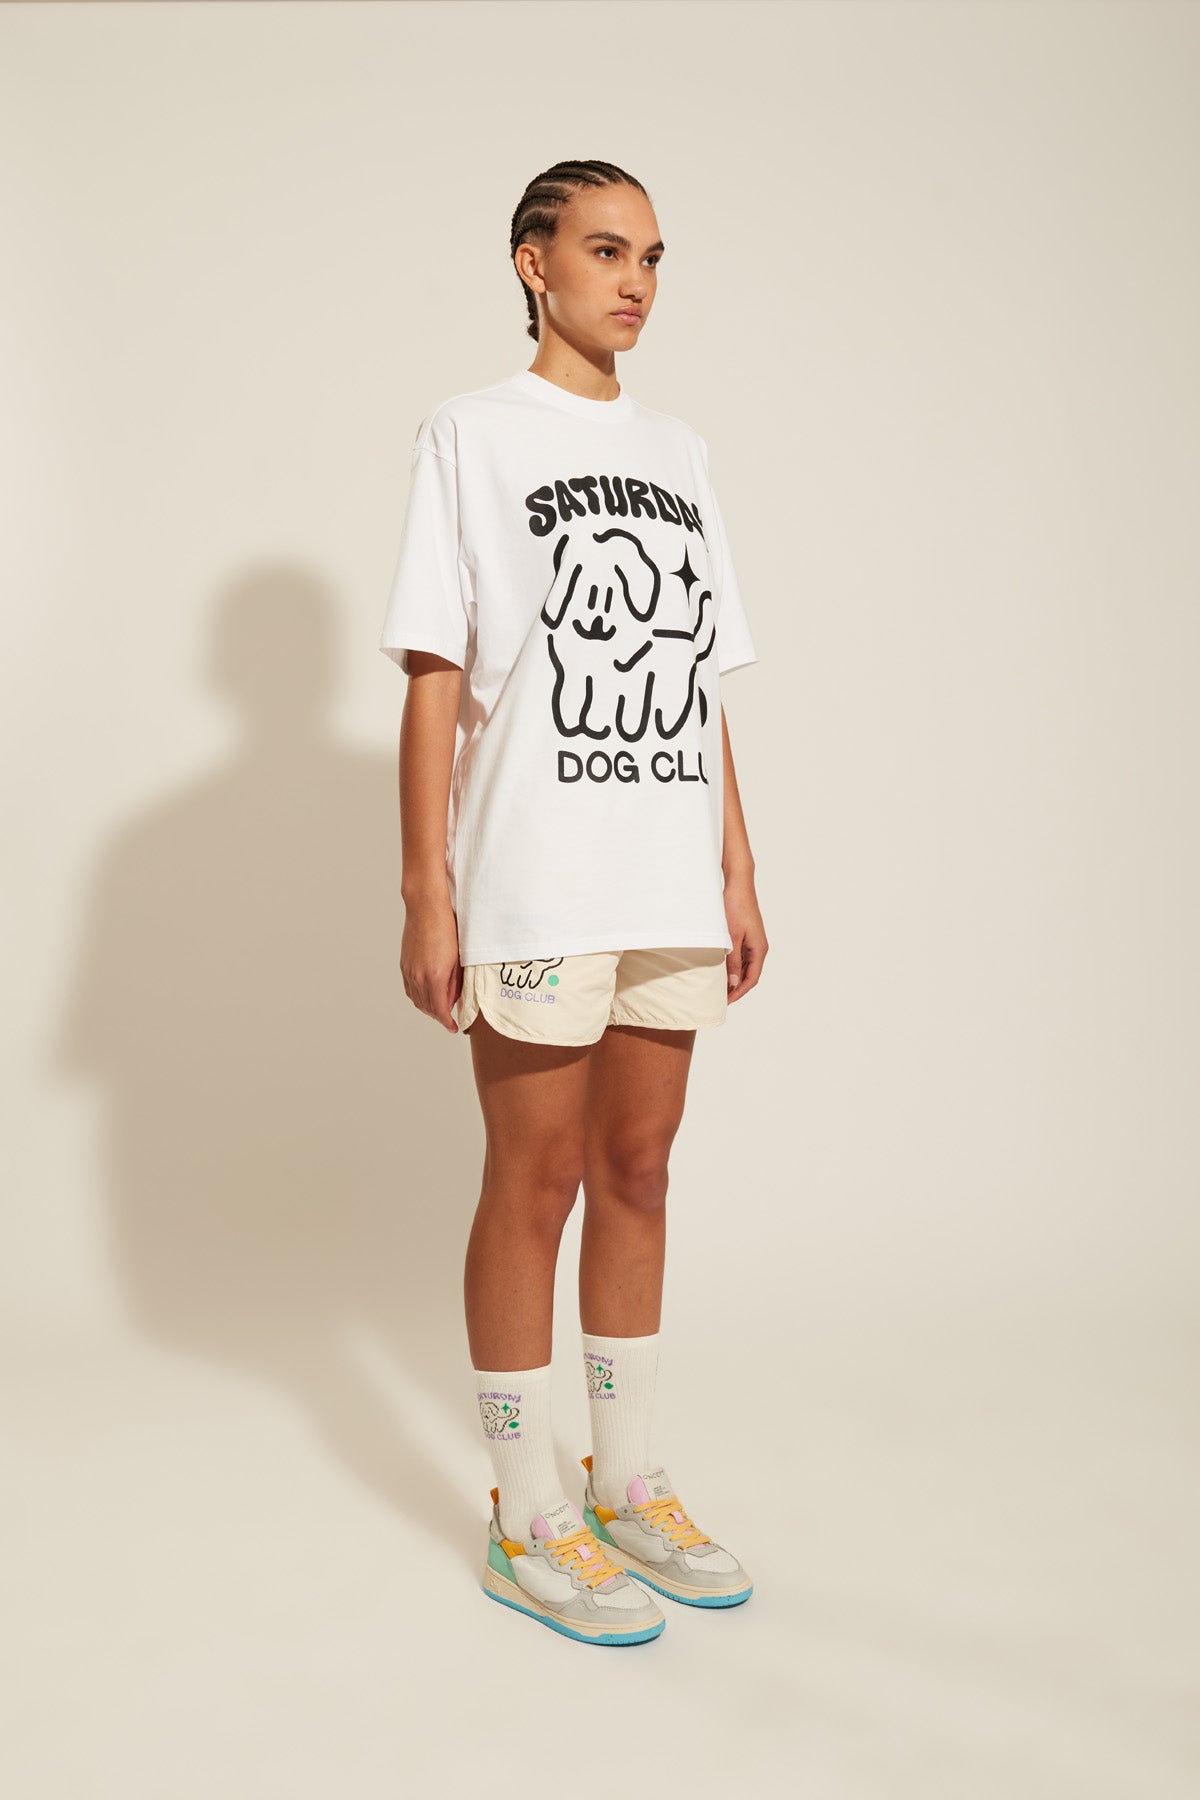 White "Saturday Dog Club" T-shirt